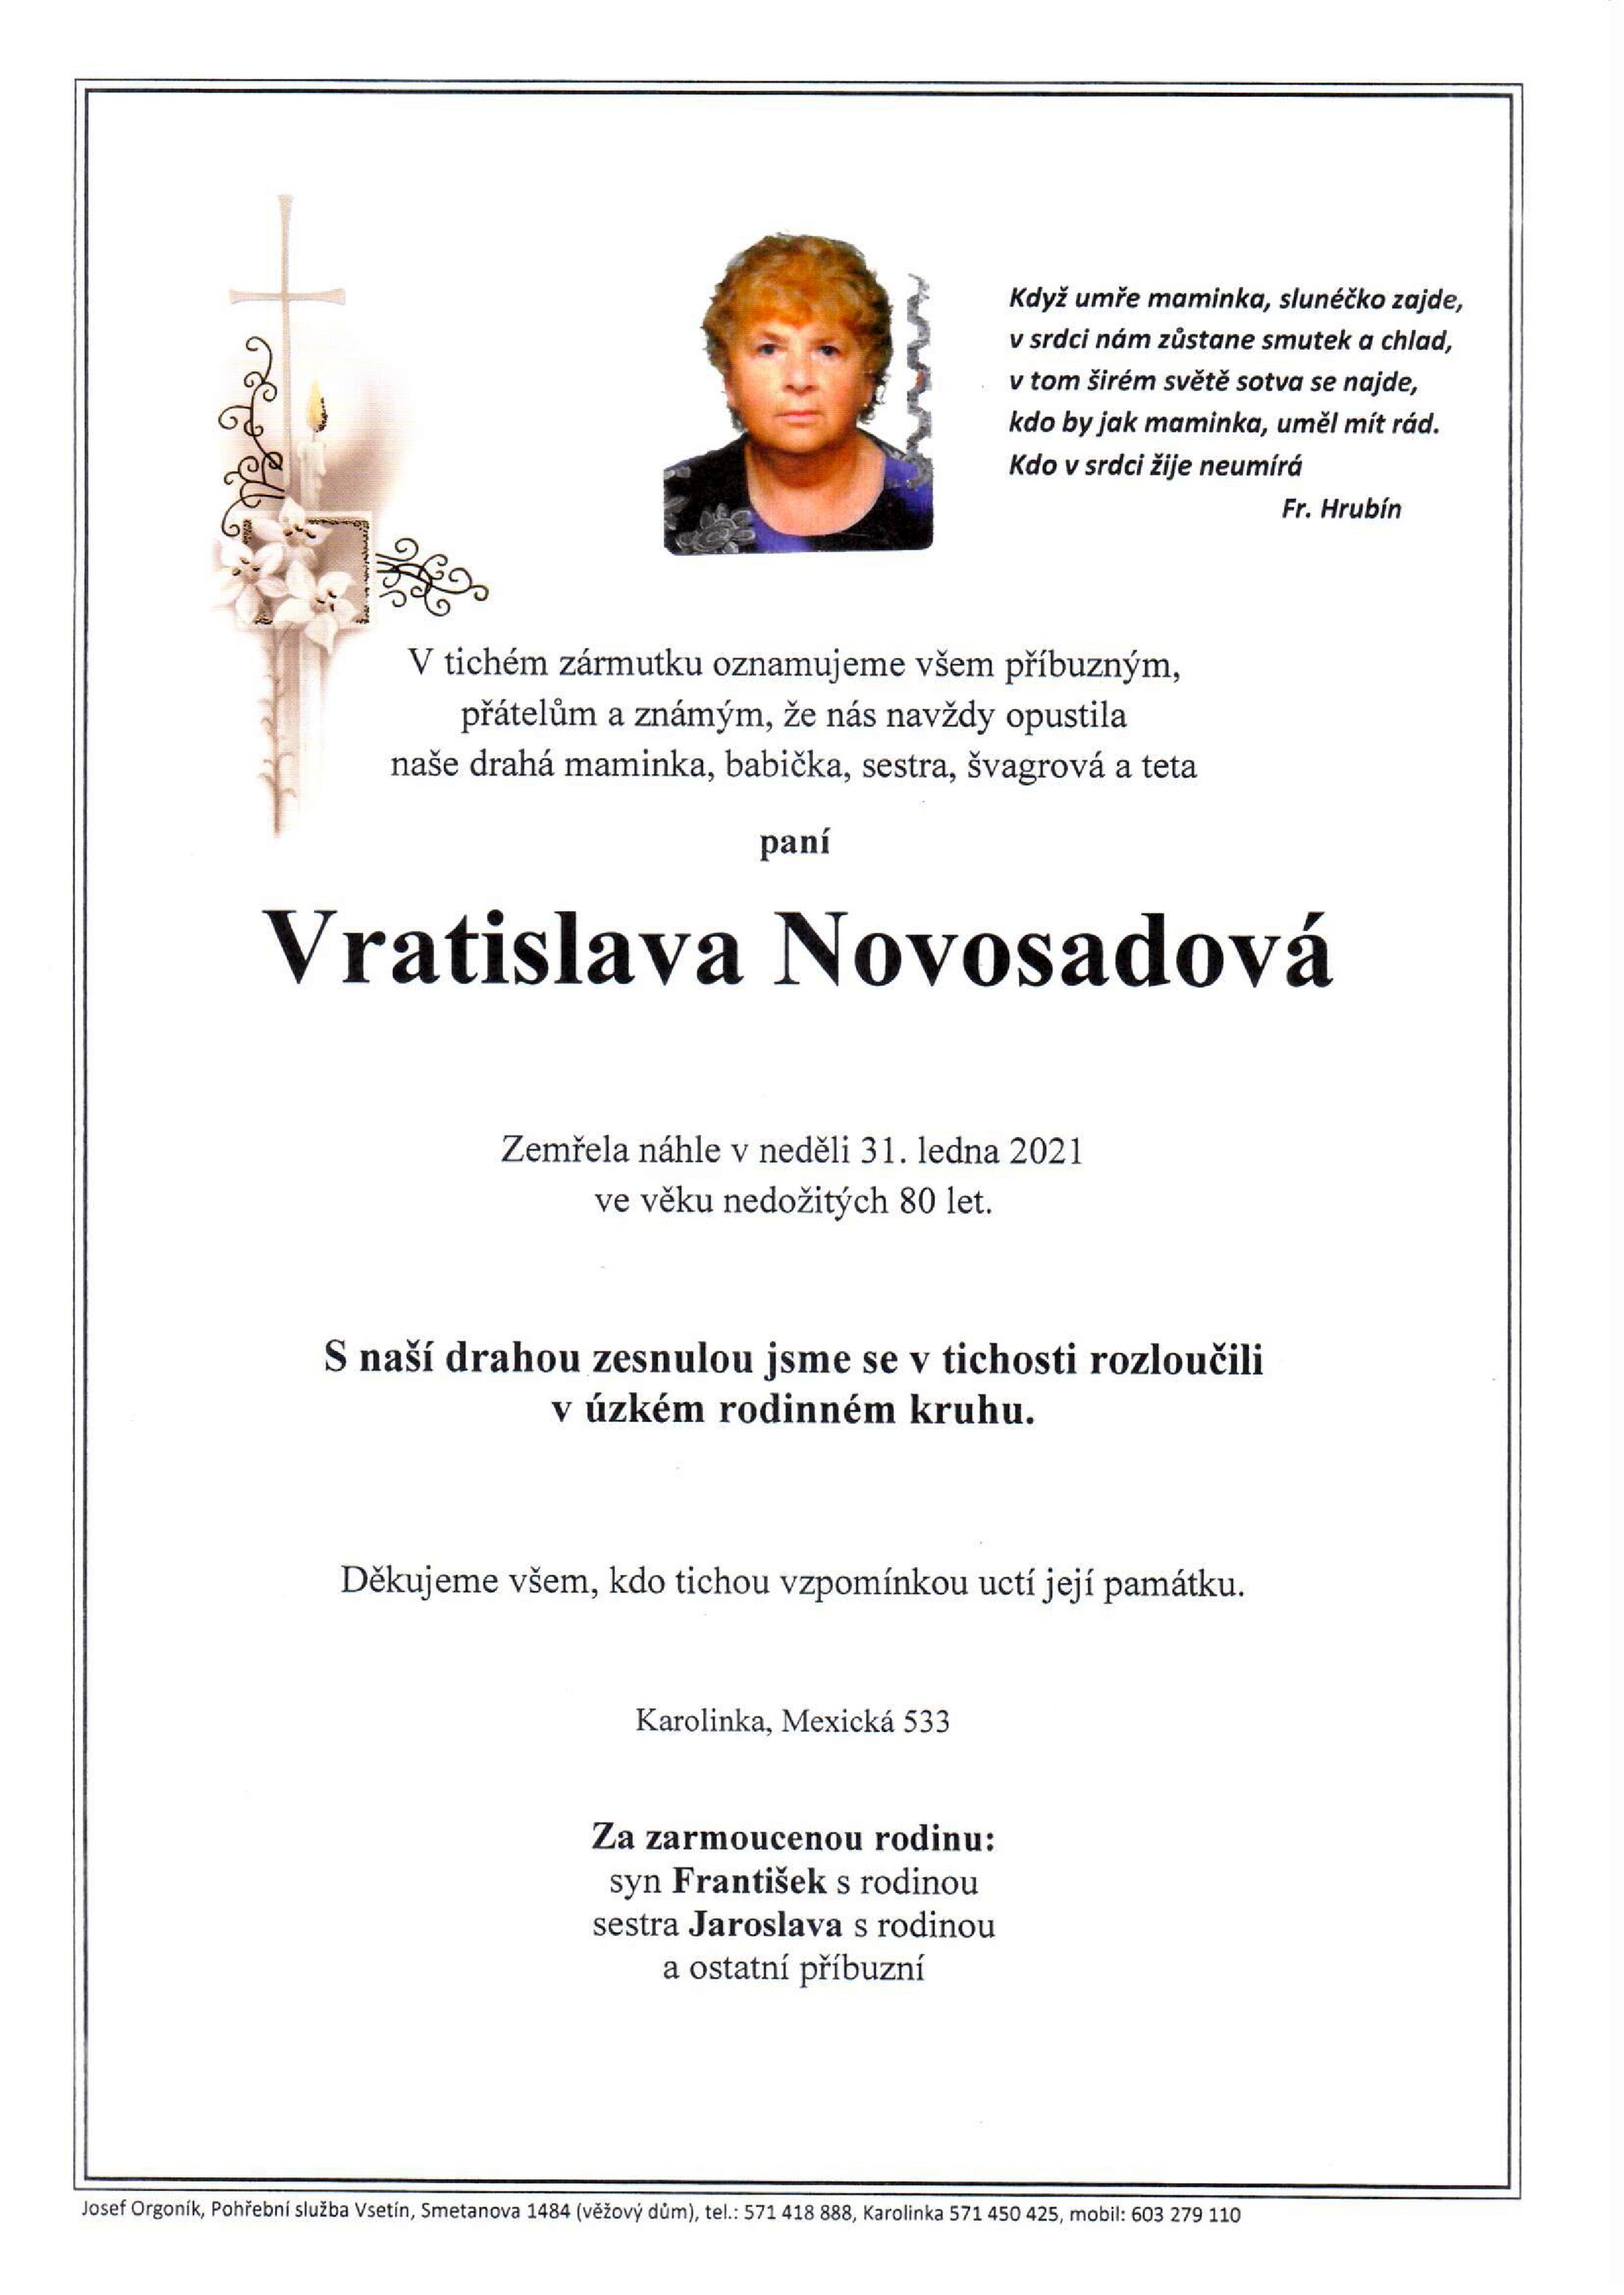 Vratislava Novosadová